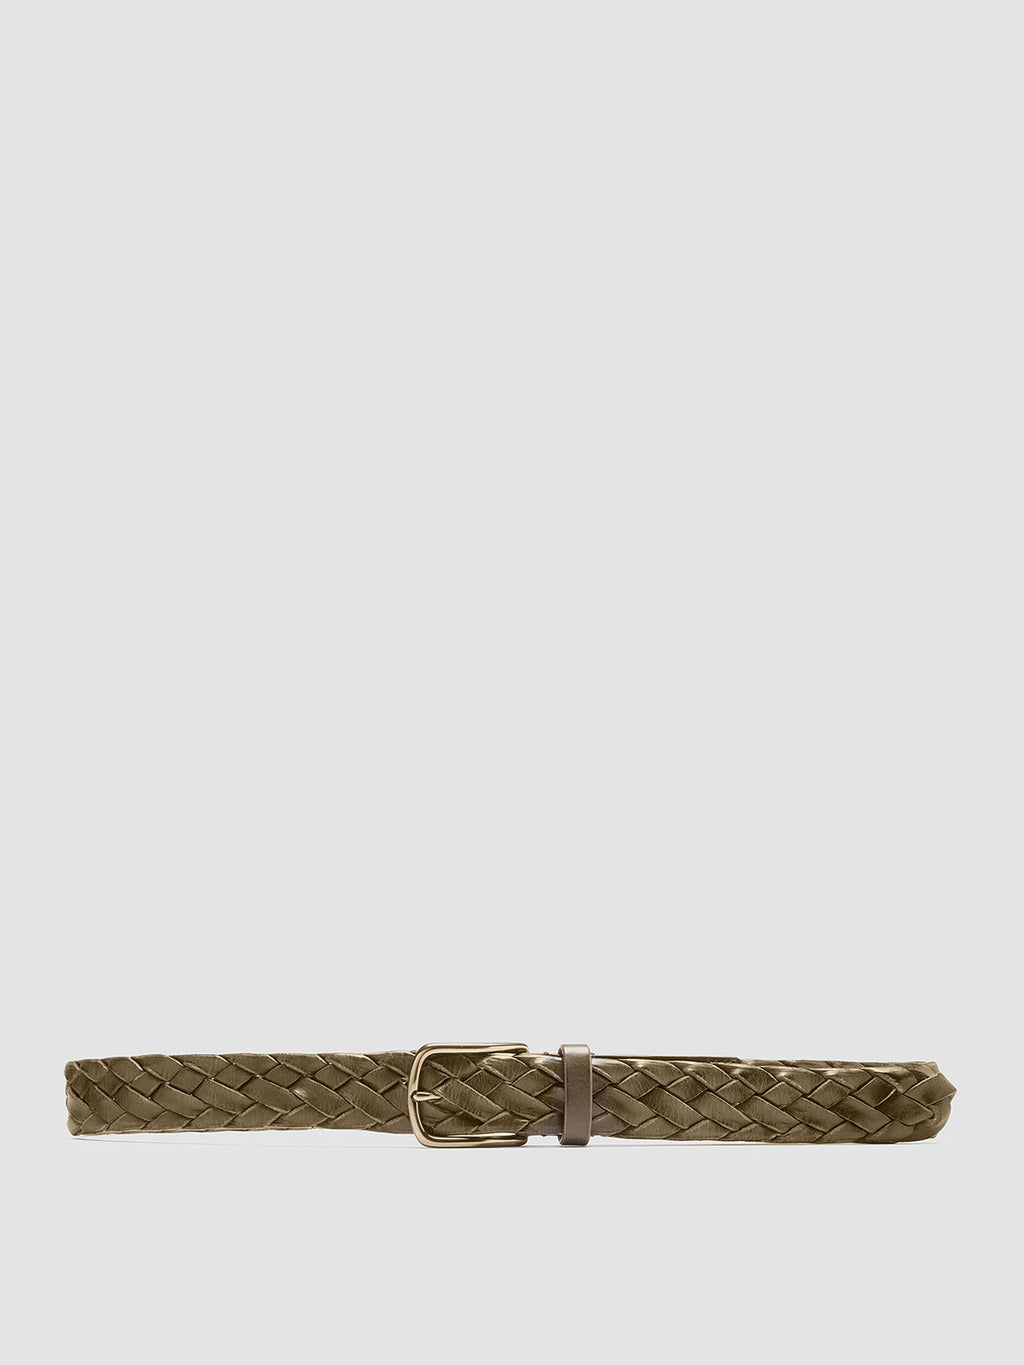 OC STRIP 21 - Green Leather belt  Officine Creative - 1